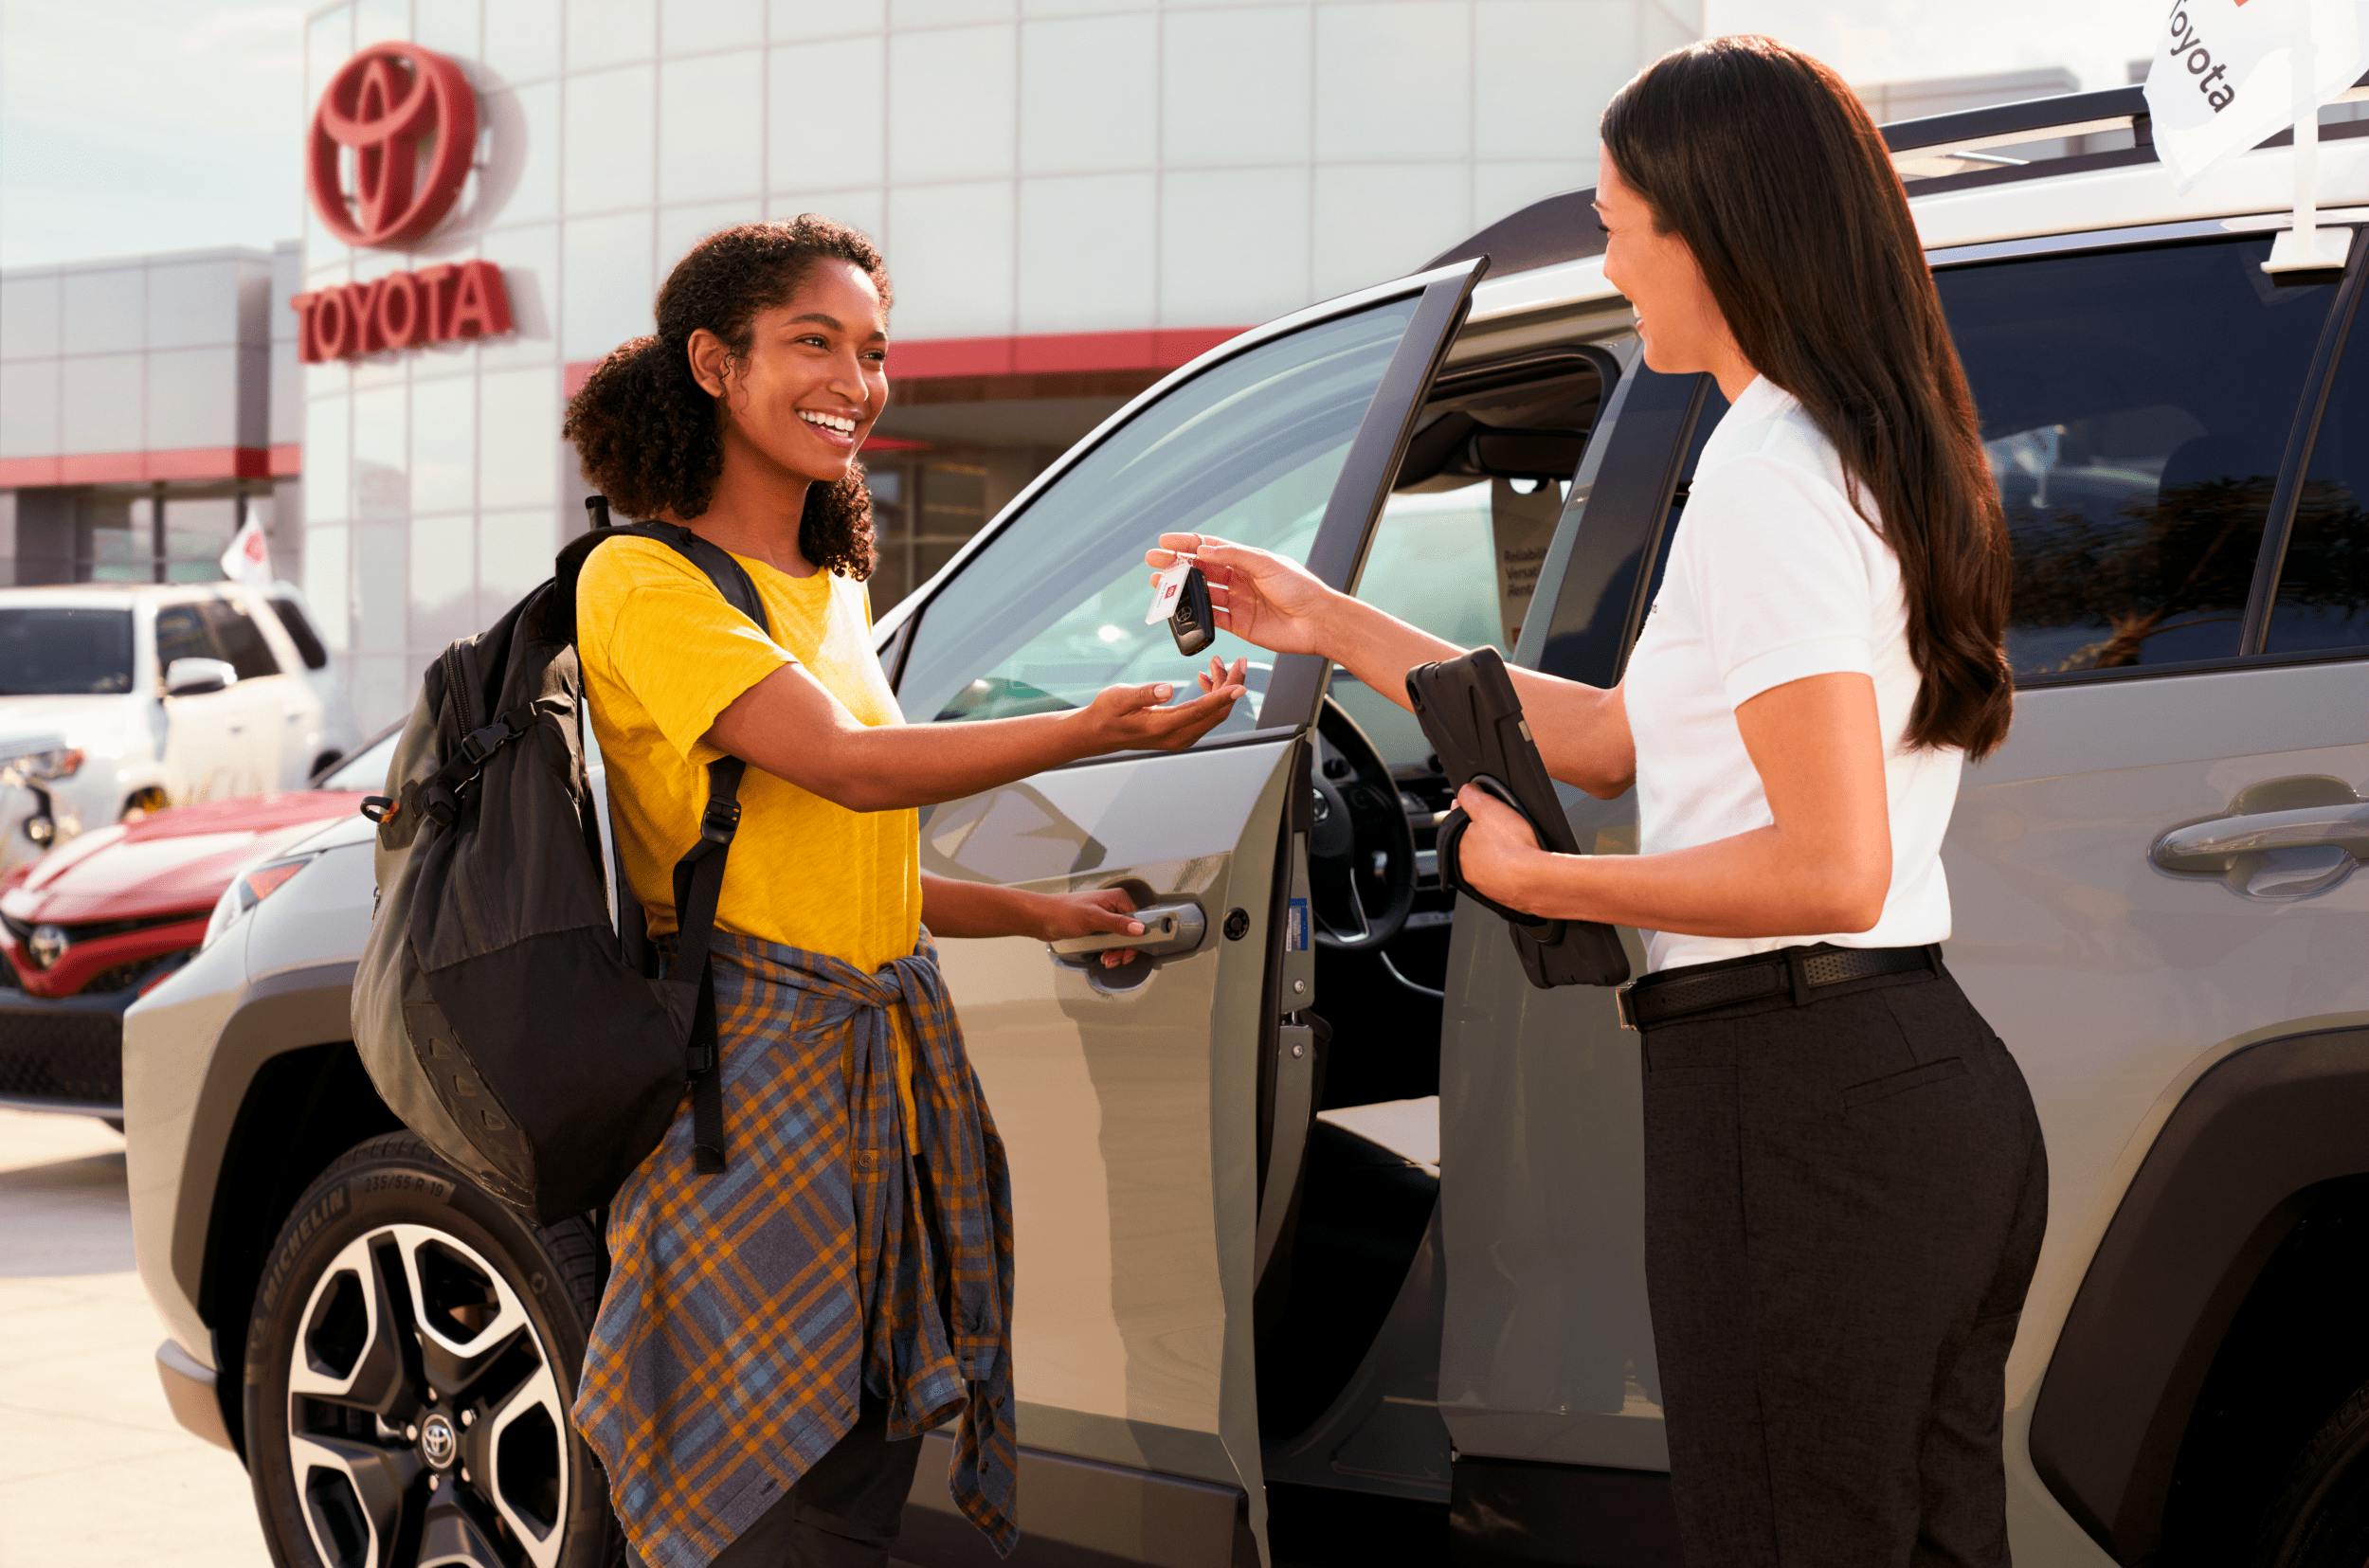 women handing over keys for rental vehicle at dealership